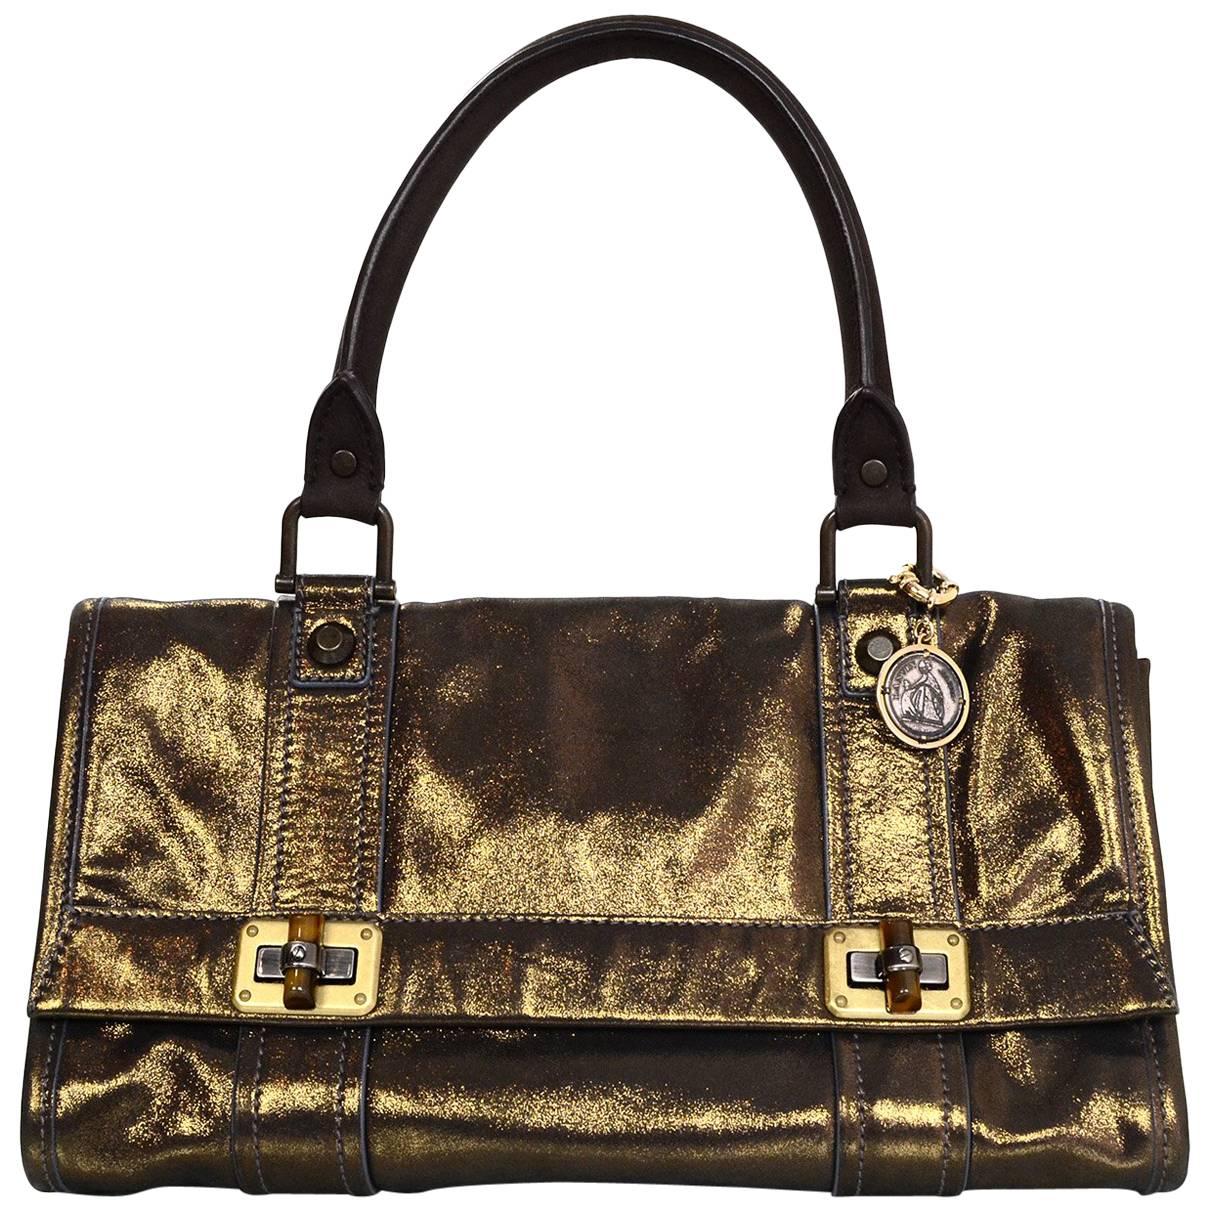  Lanvin Gold Iridescent Handle Bag